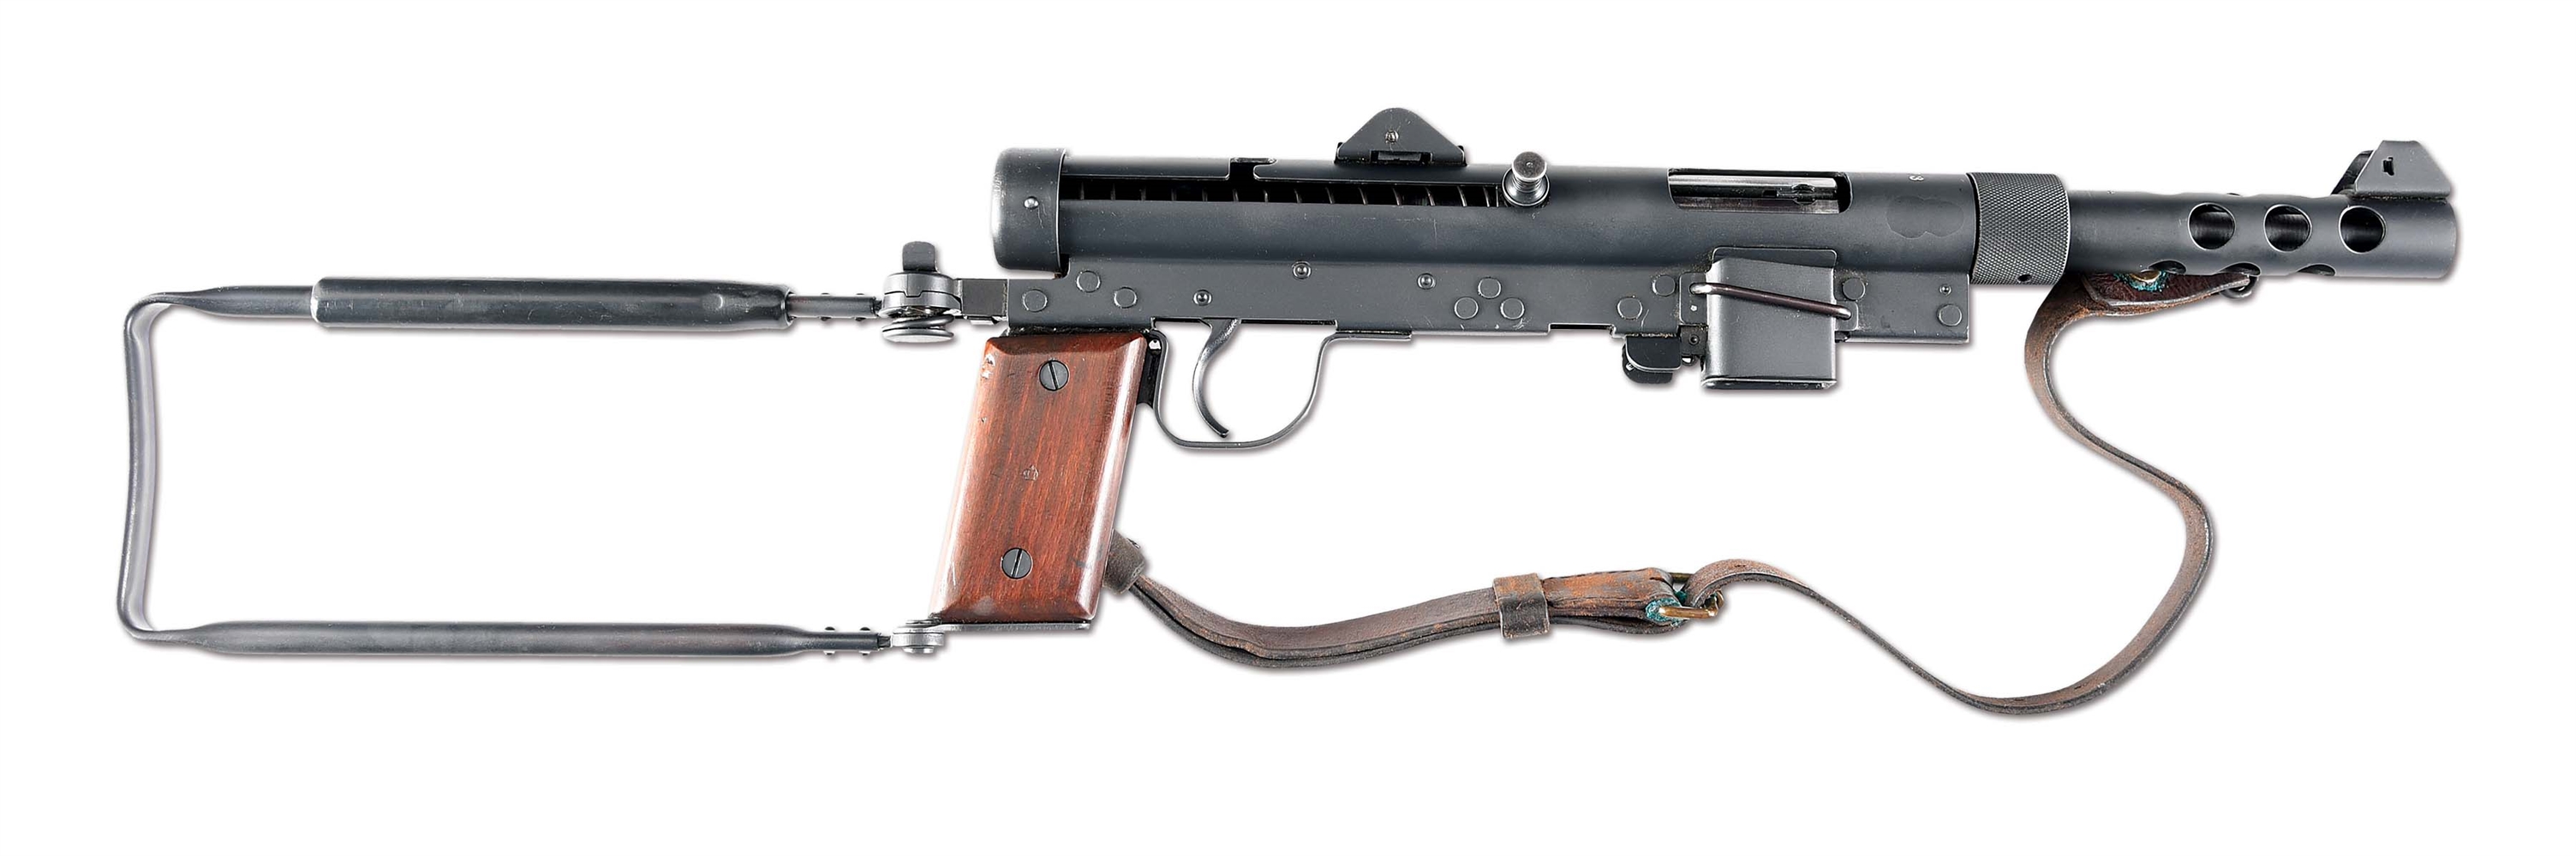 (N) ORIGINAL SWEDISH CARL GUSTAF M/45 SUBMACHINE GUN (CURIO & RELIC).